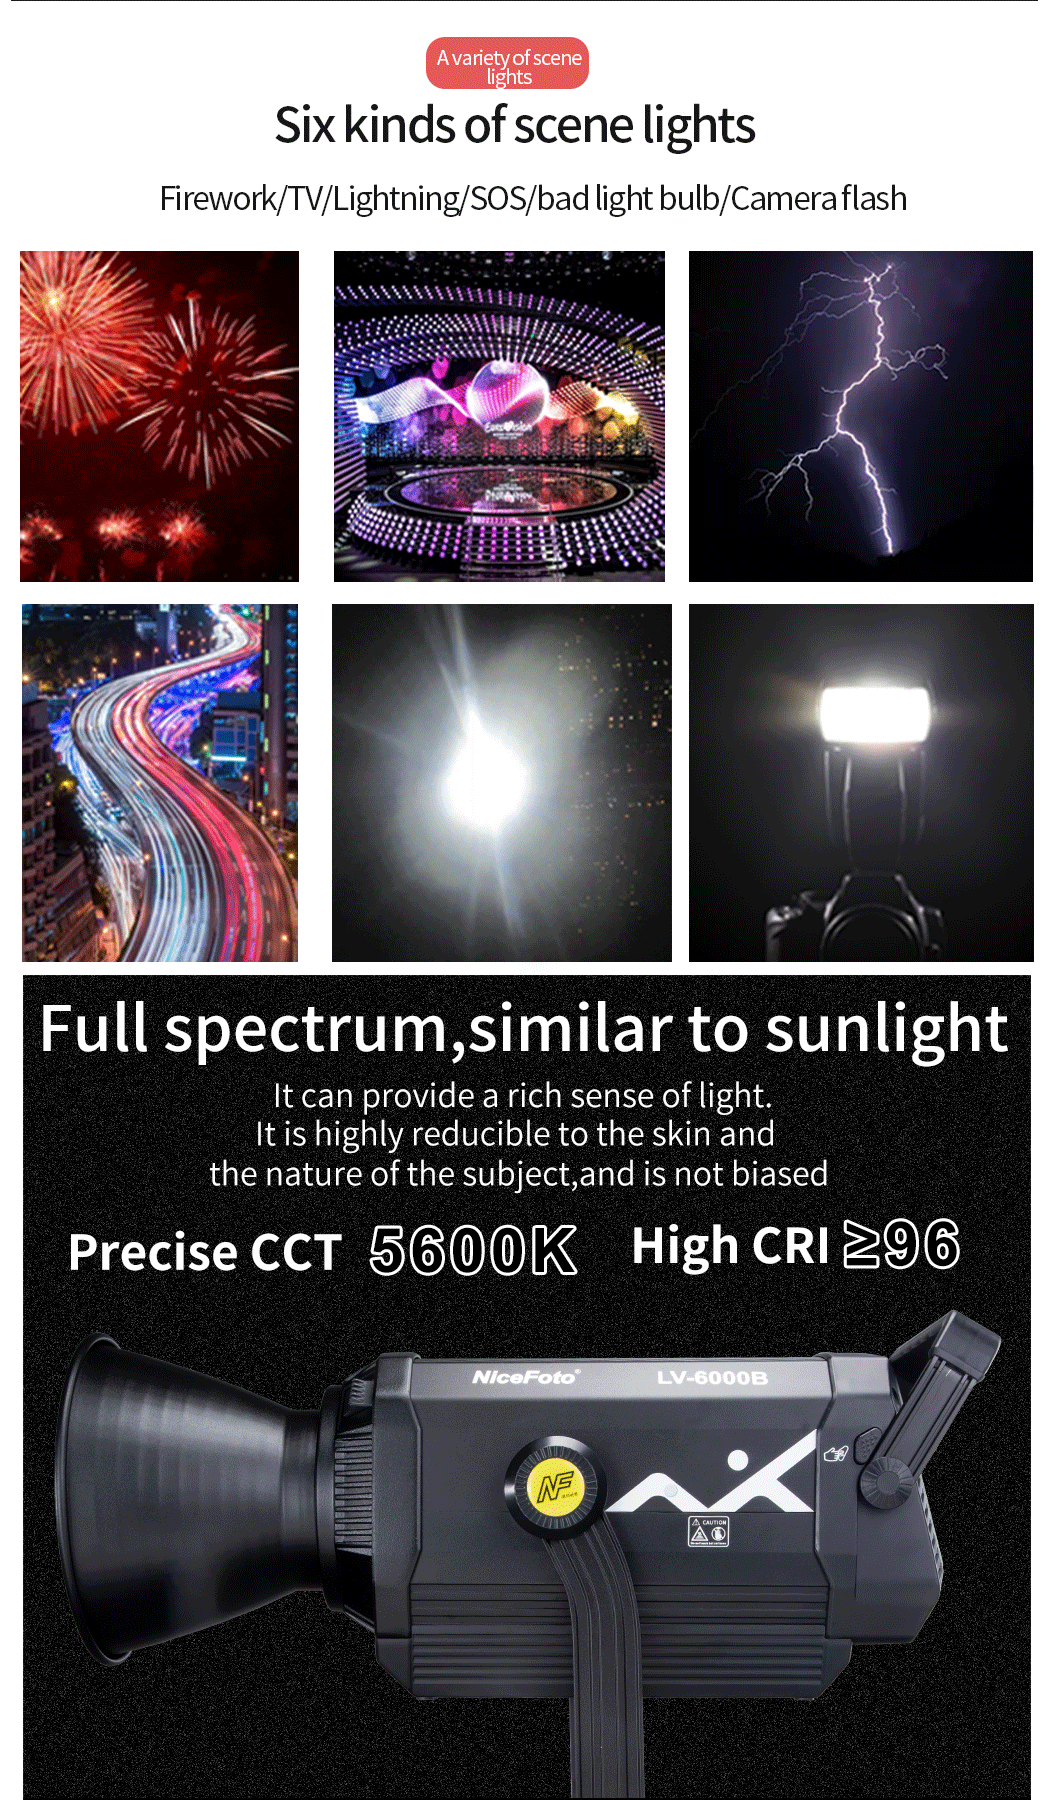 NiceFoto LED LV-6000B Video Light